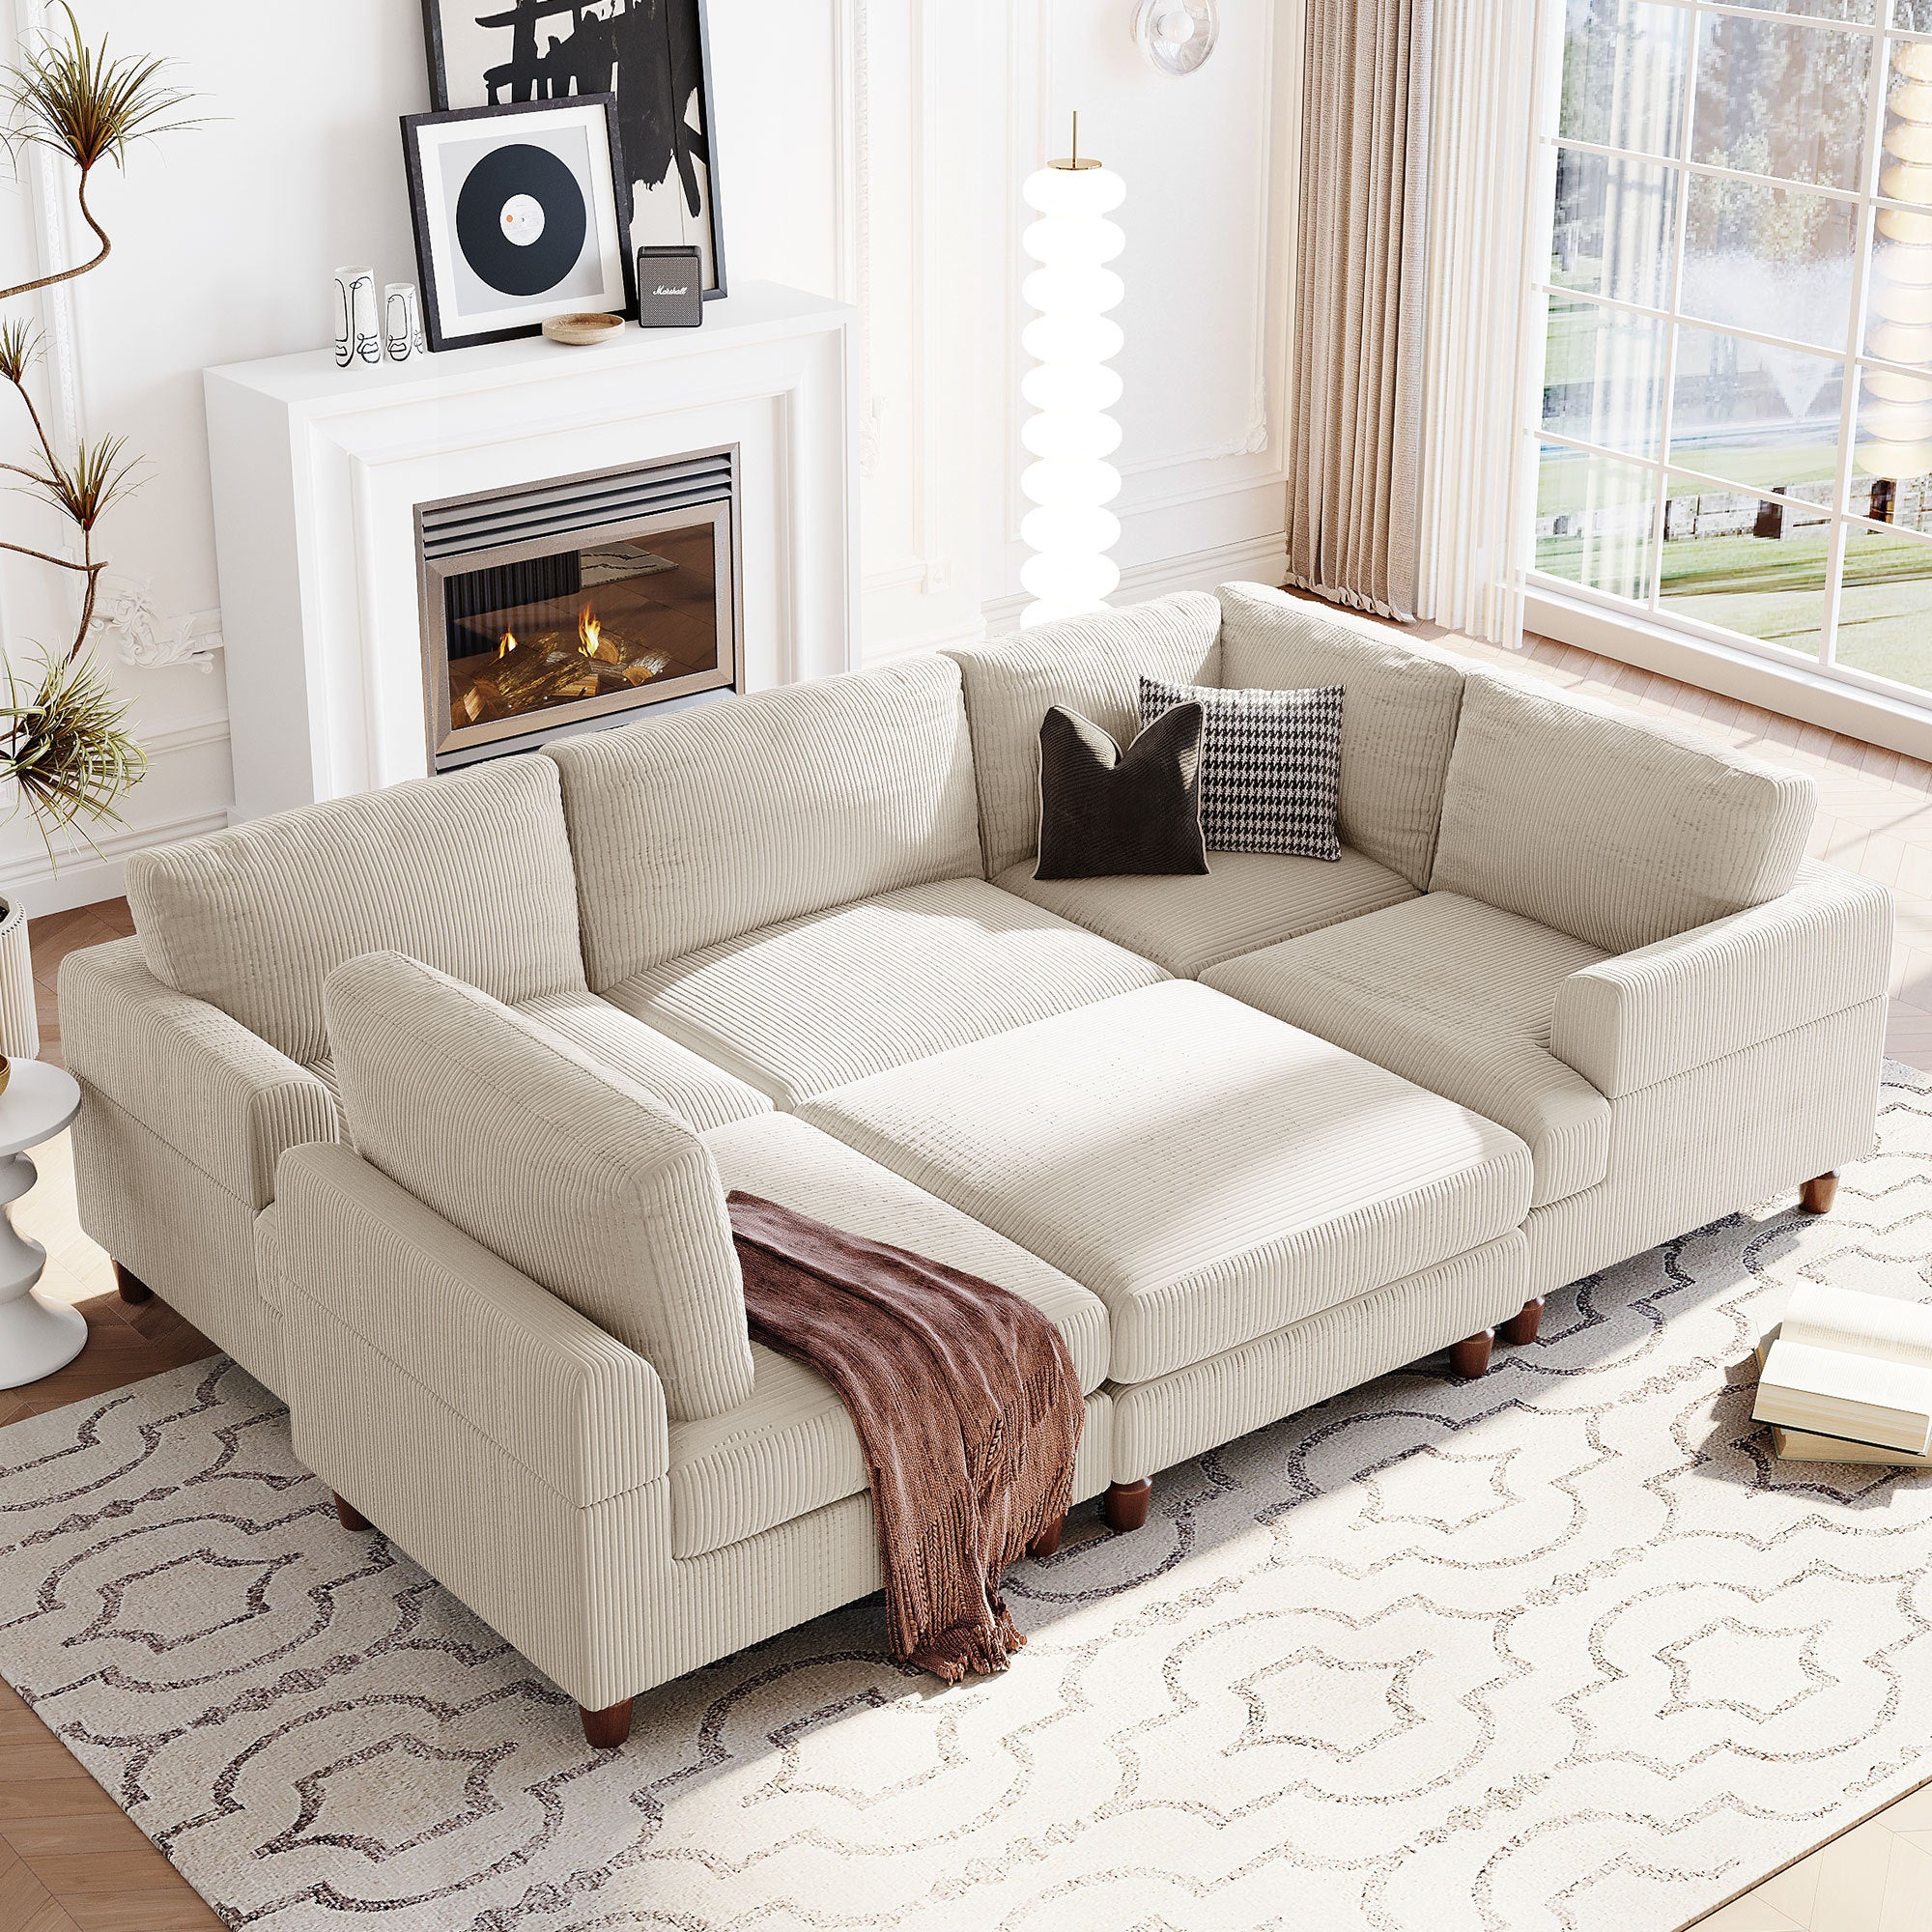 Modular Sectional Sofa: L-Shaped Ottoman, Beige - Spacious